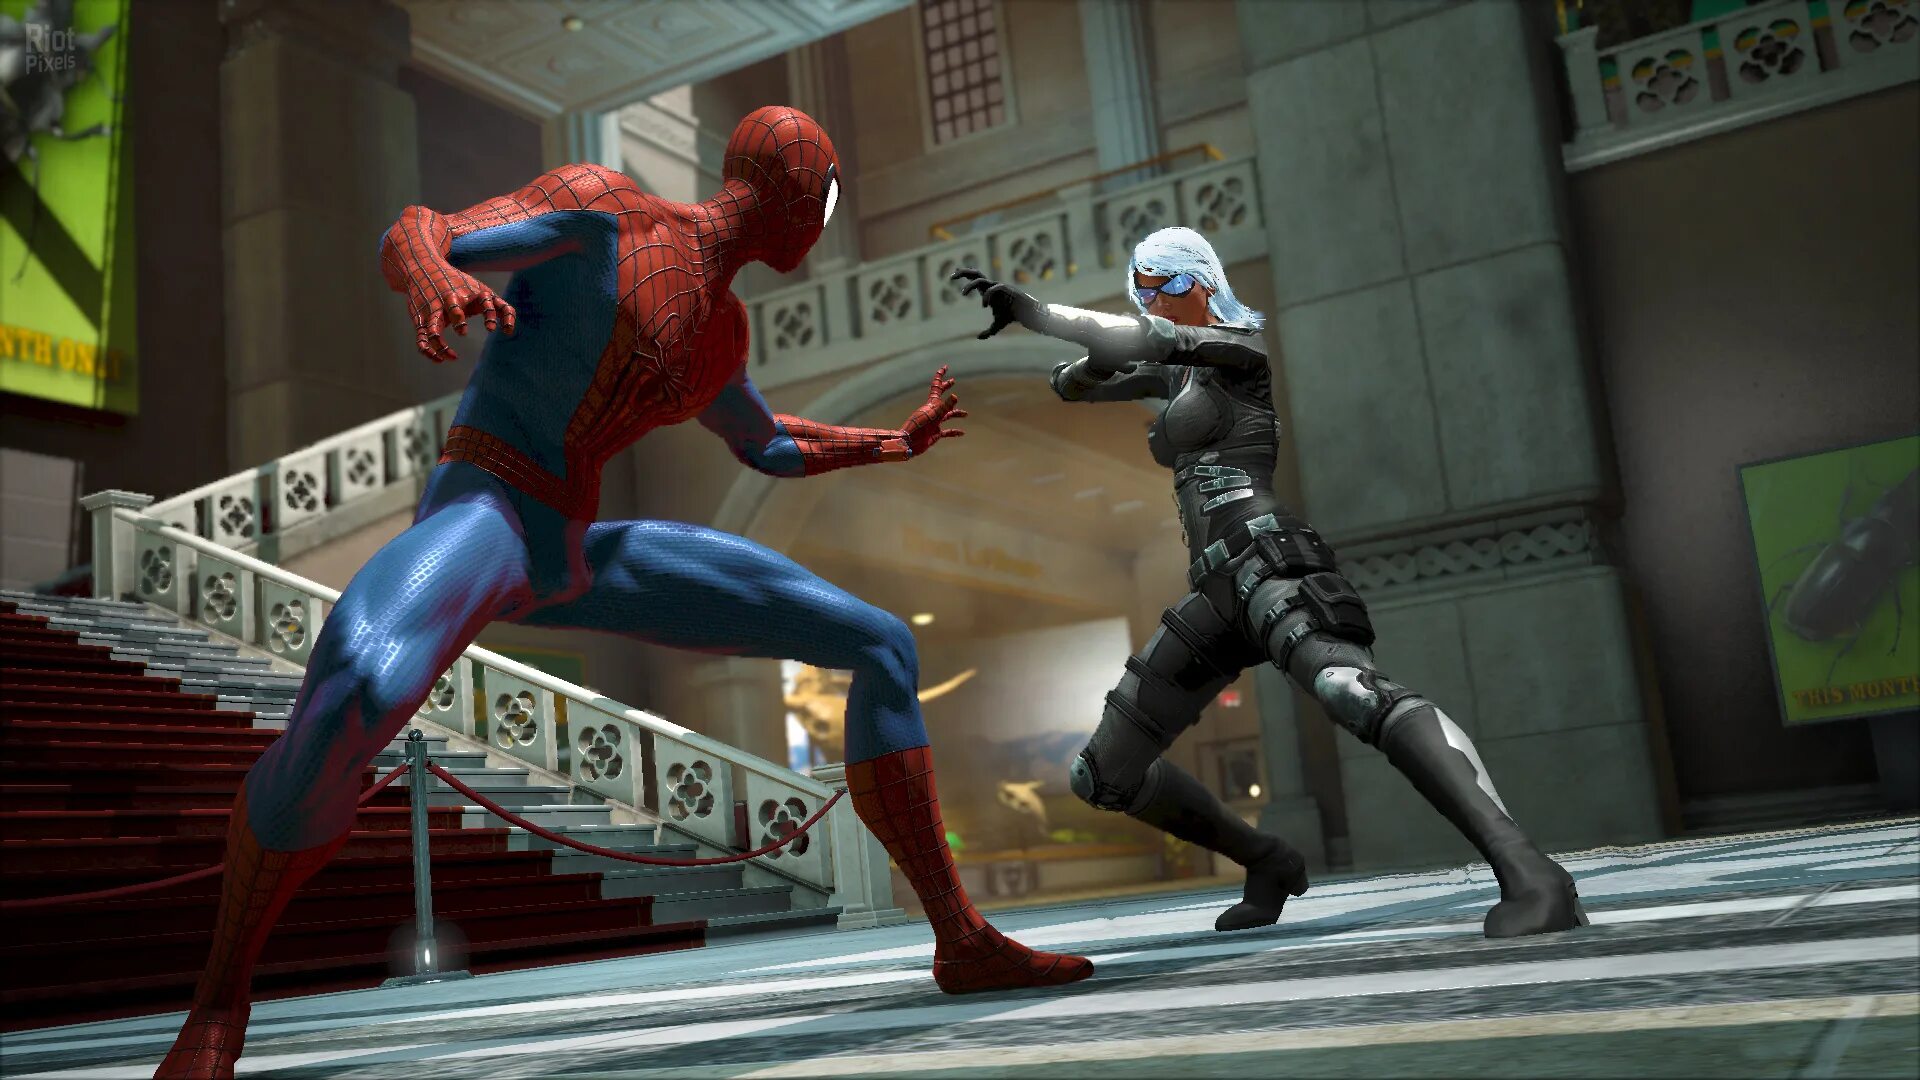 Spider man 2014 игра. The amazing Spider-man 2 игра. Новый человек паук 2 игра. Человек паук амазинг 2.